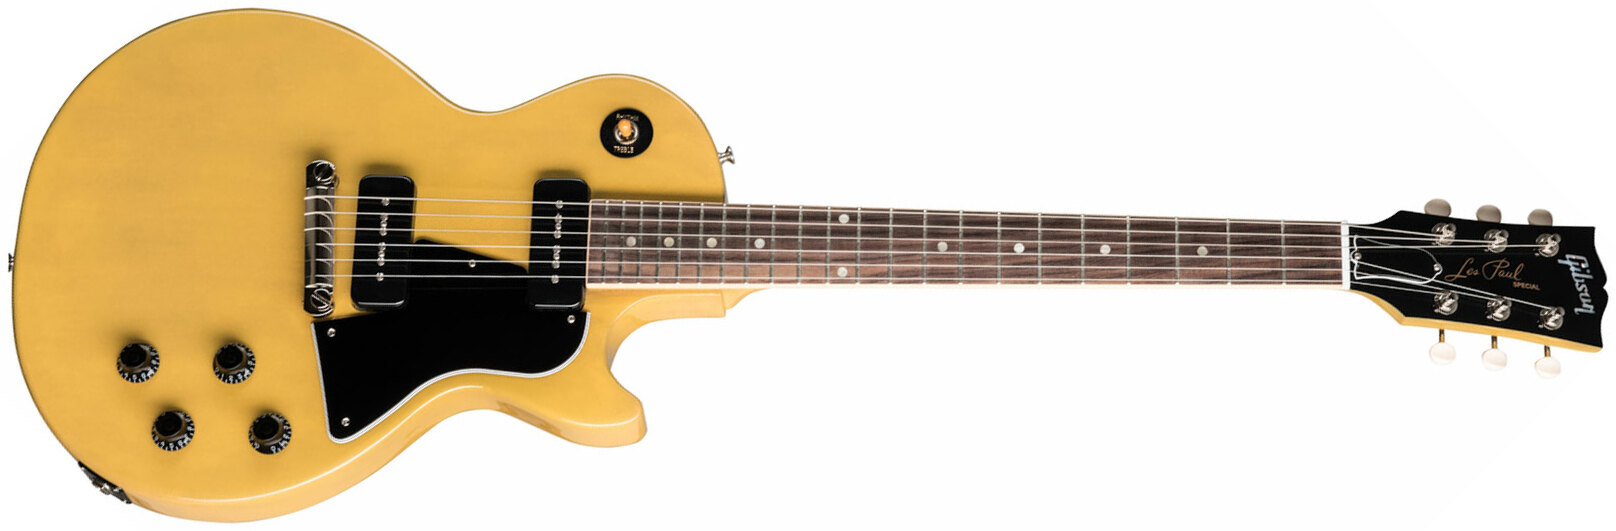 Gibson Les Paul Special Original 2p90 Ht Rw - Tv Yellow - Guitarra eléctrica de corte único. - Main picture